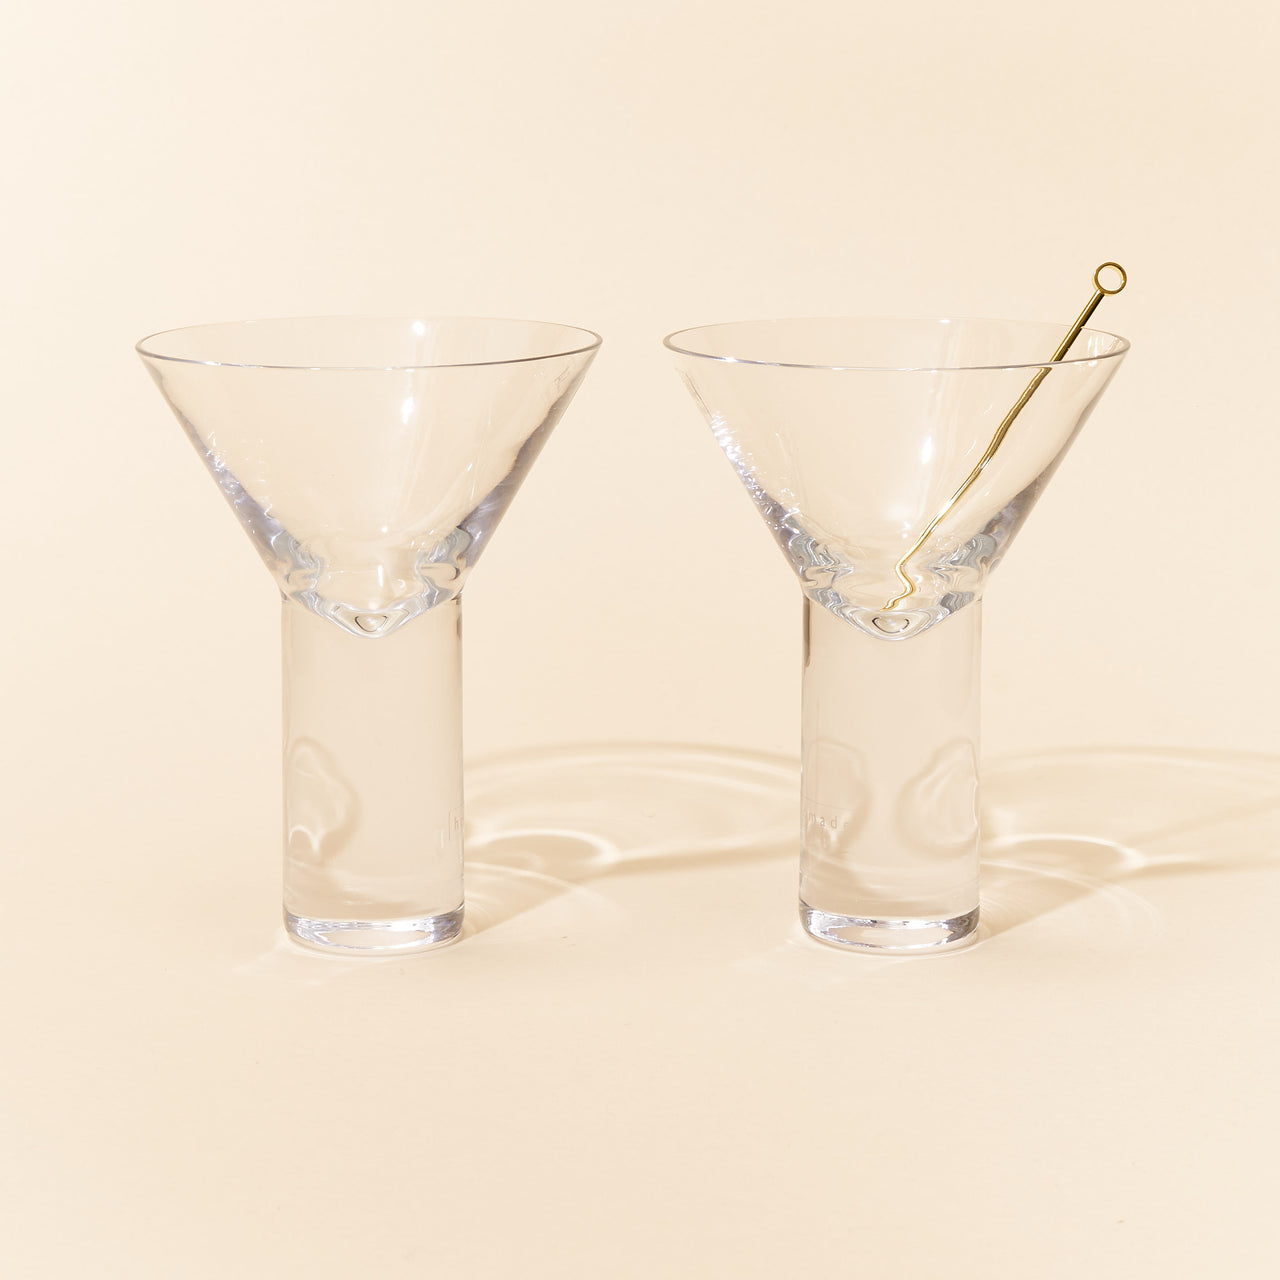 Boris Martini Glass (Set of 2)